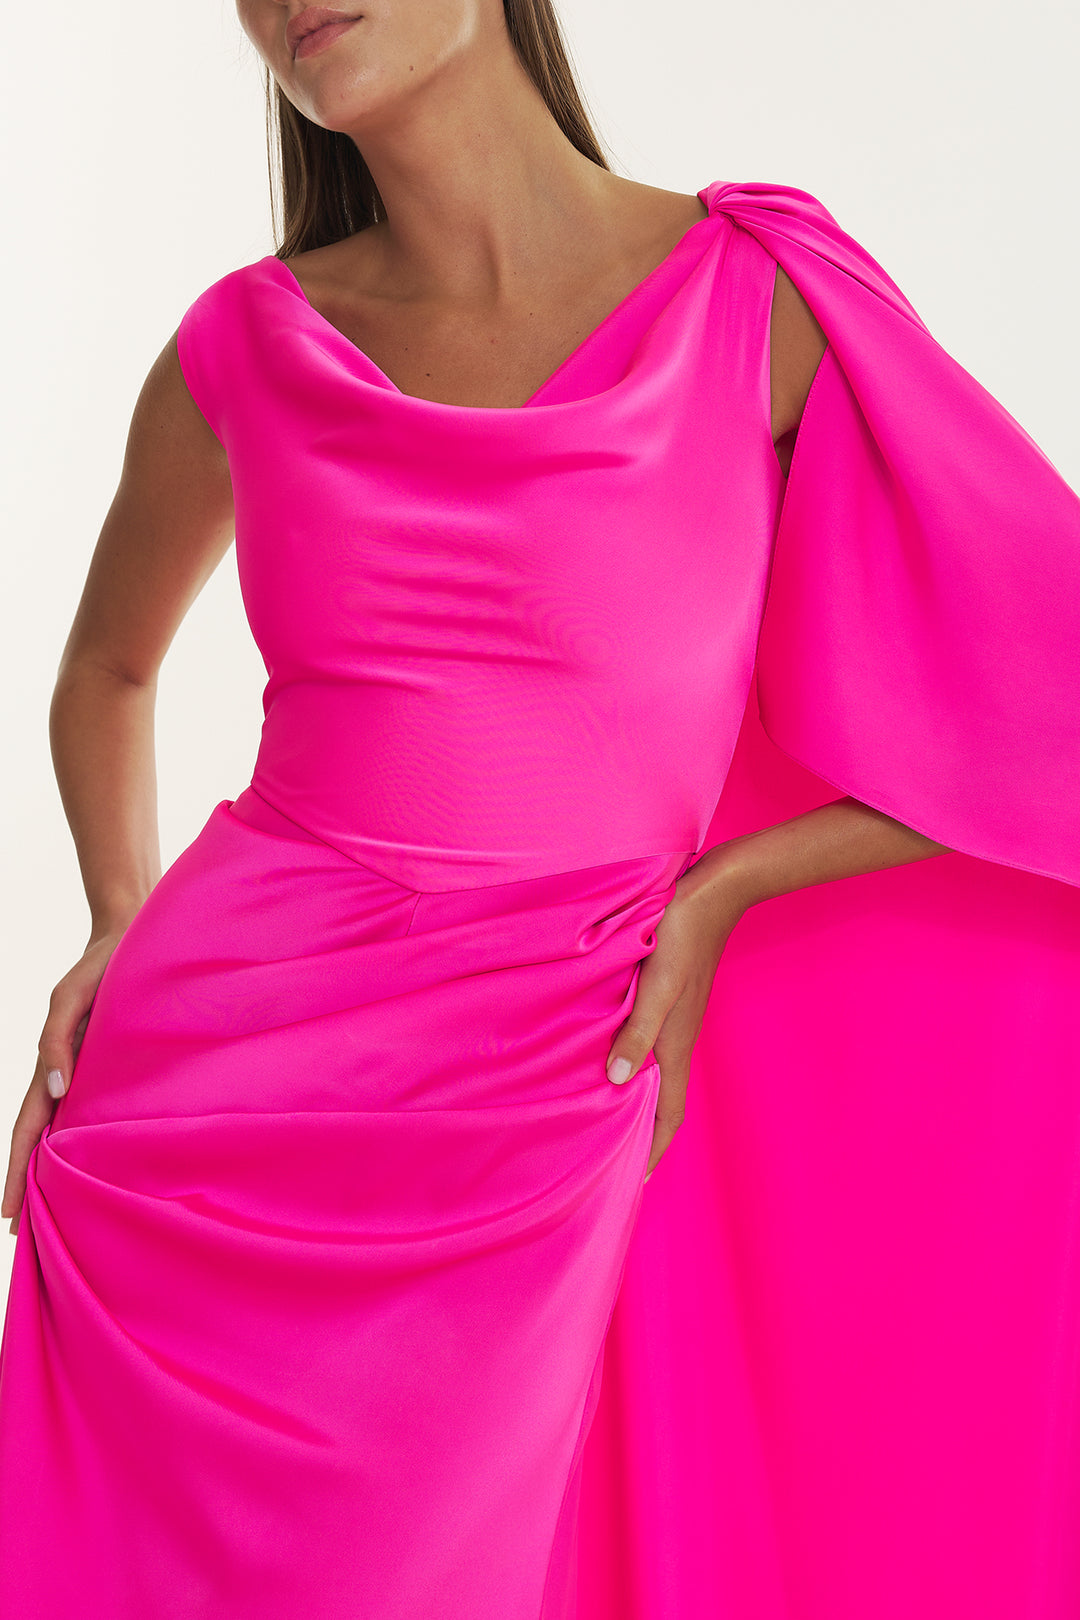 Cora Pink Caped Asymmetrical Satin Crepe Dress